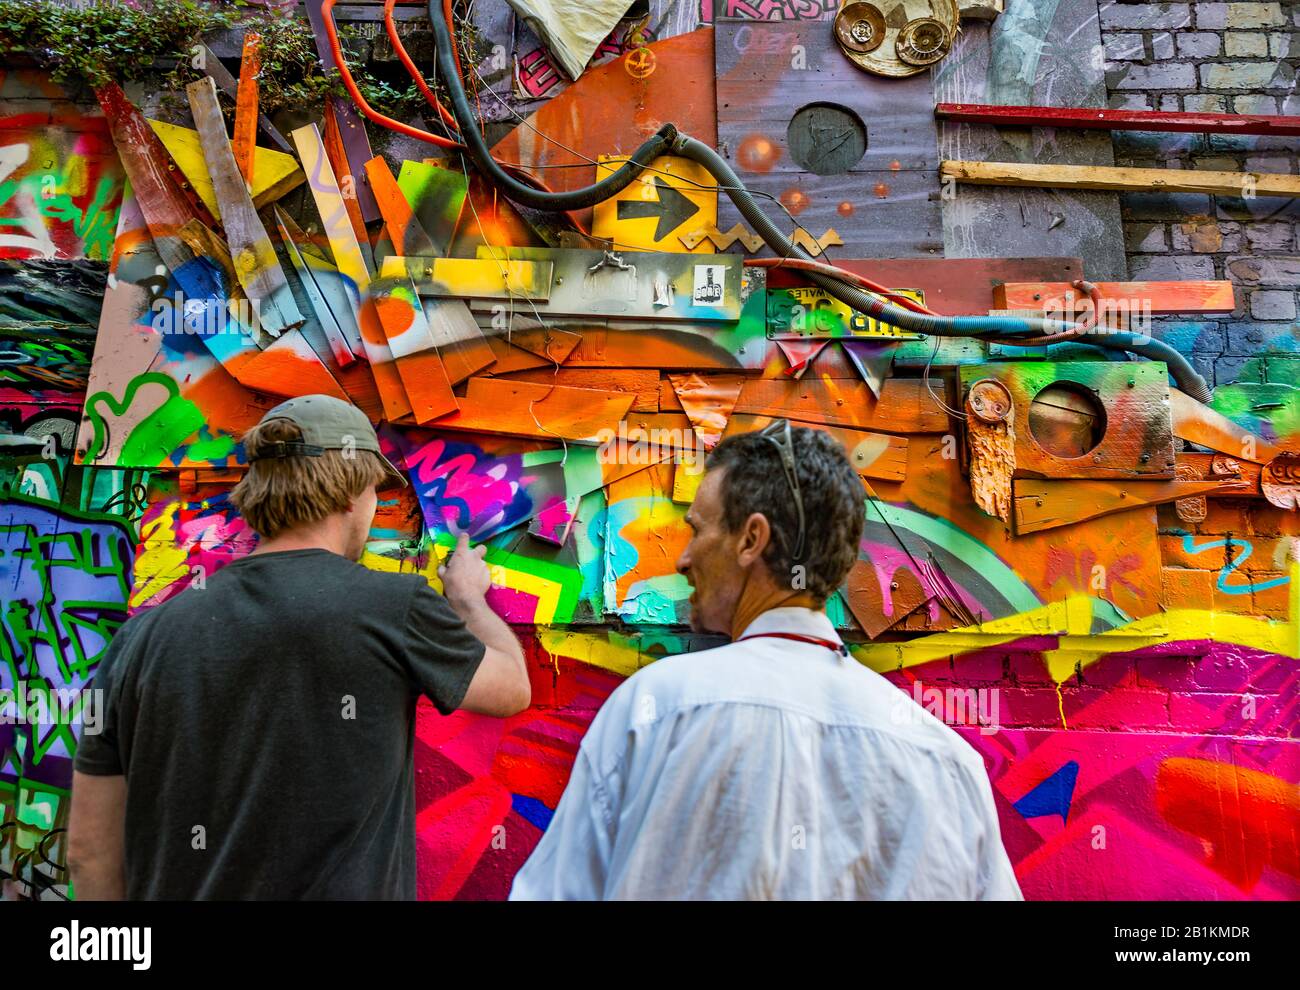 Two graffiti artists working on urban artwork, down graffiti filled alley ways, Hosier Street, Melbourne Lanes, Melbourne, Victoria, Australia Stock Photo